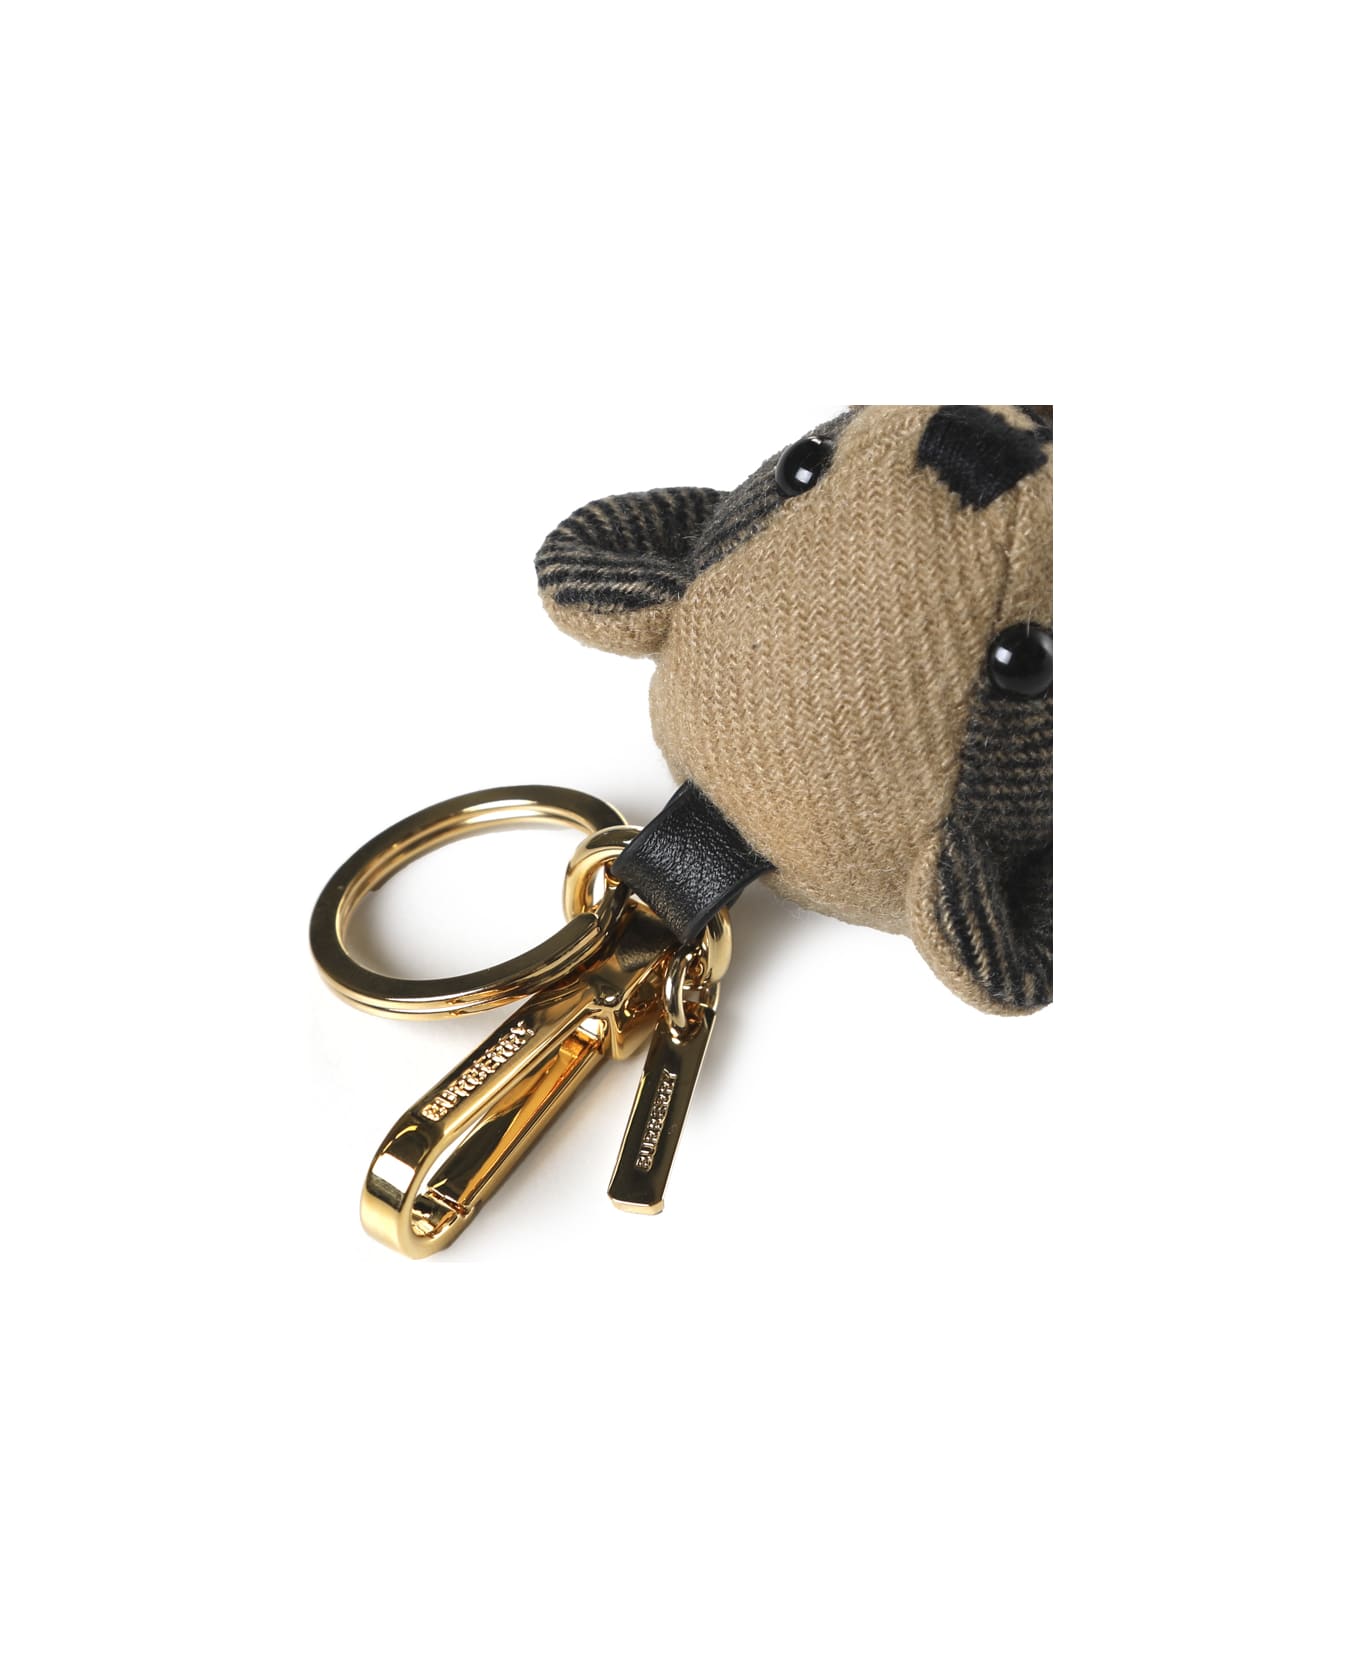 Burberry Bear Keychain With Bow Tie - Archive beige